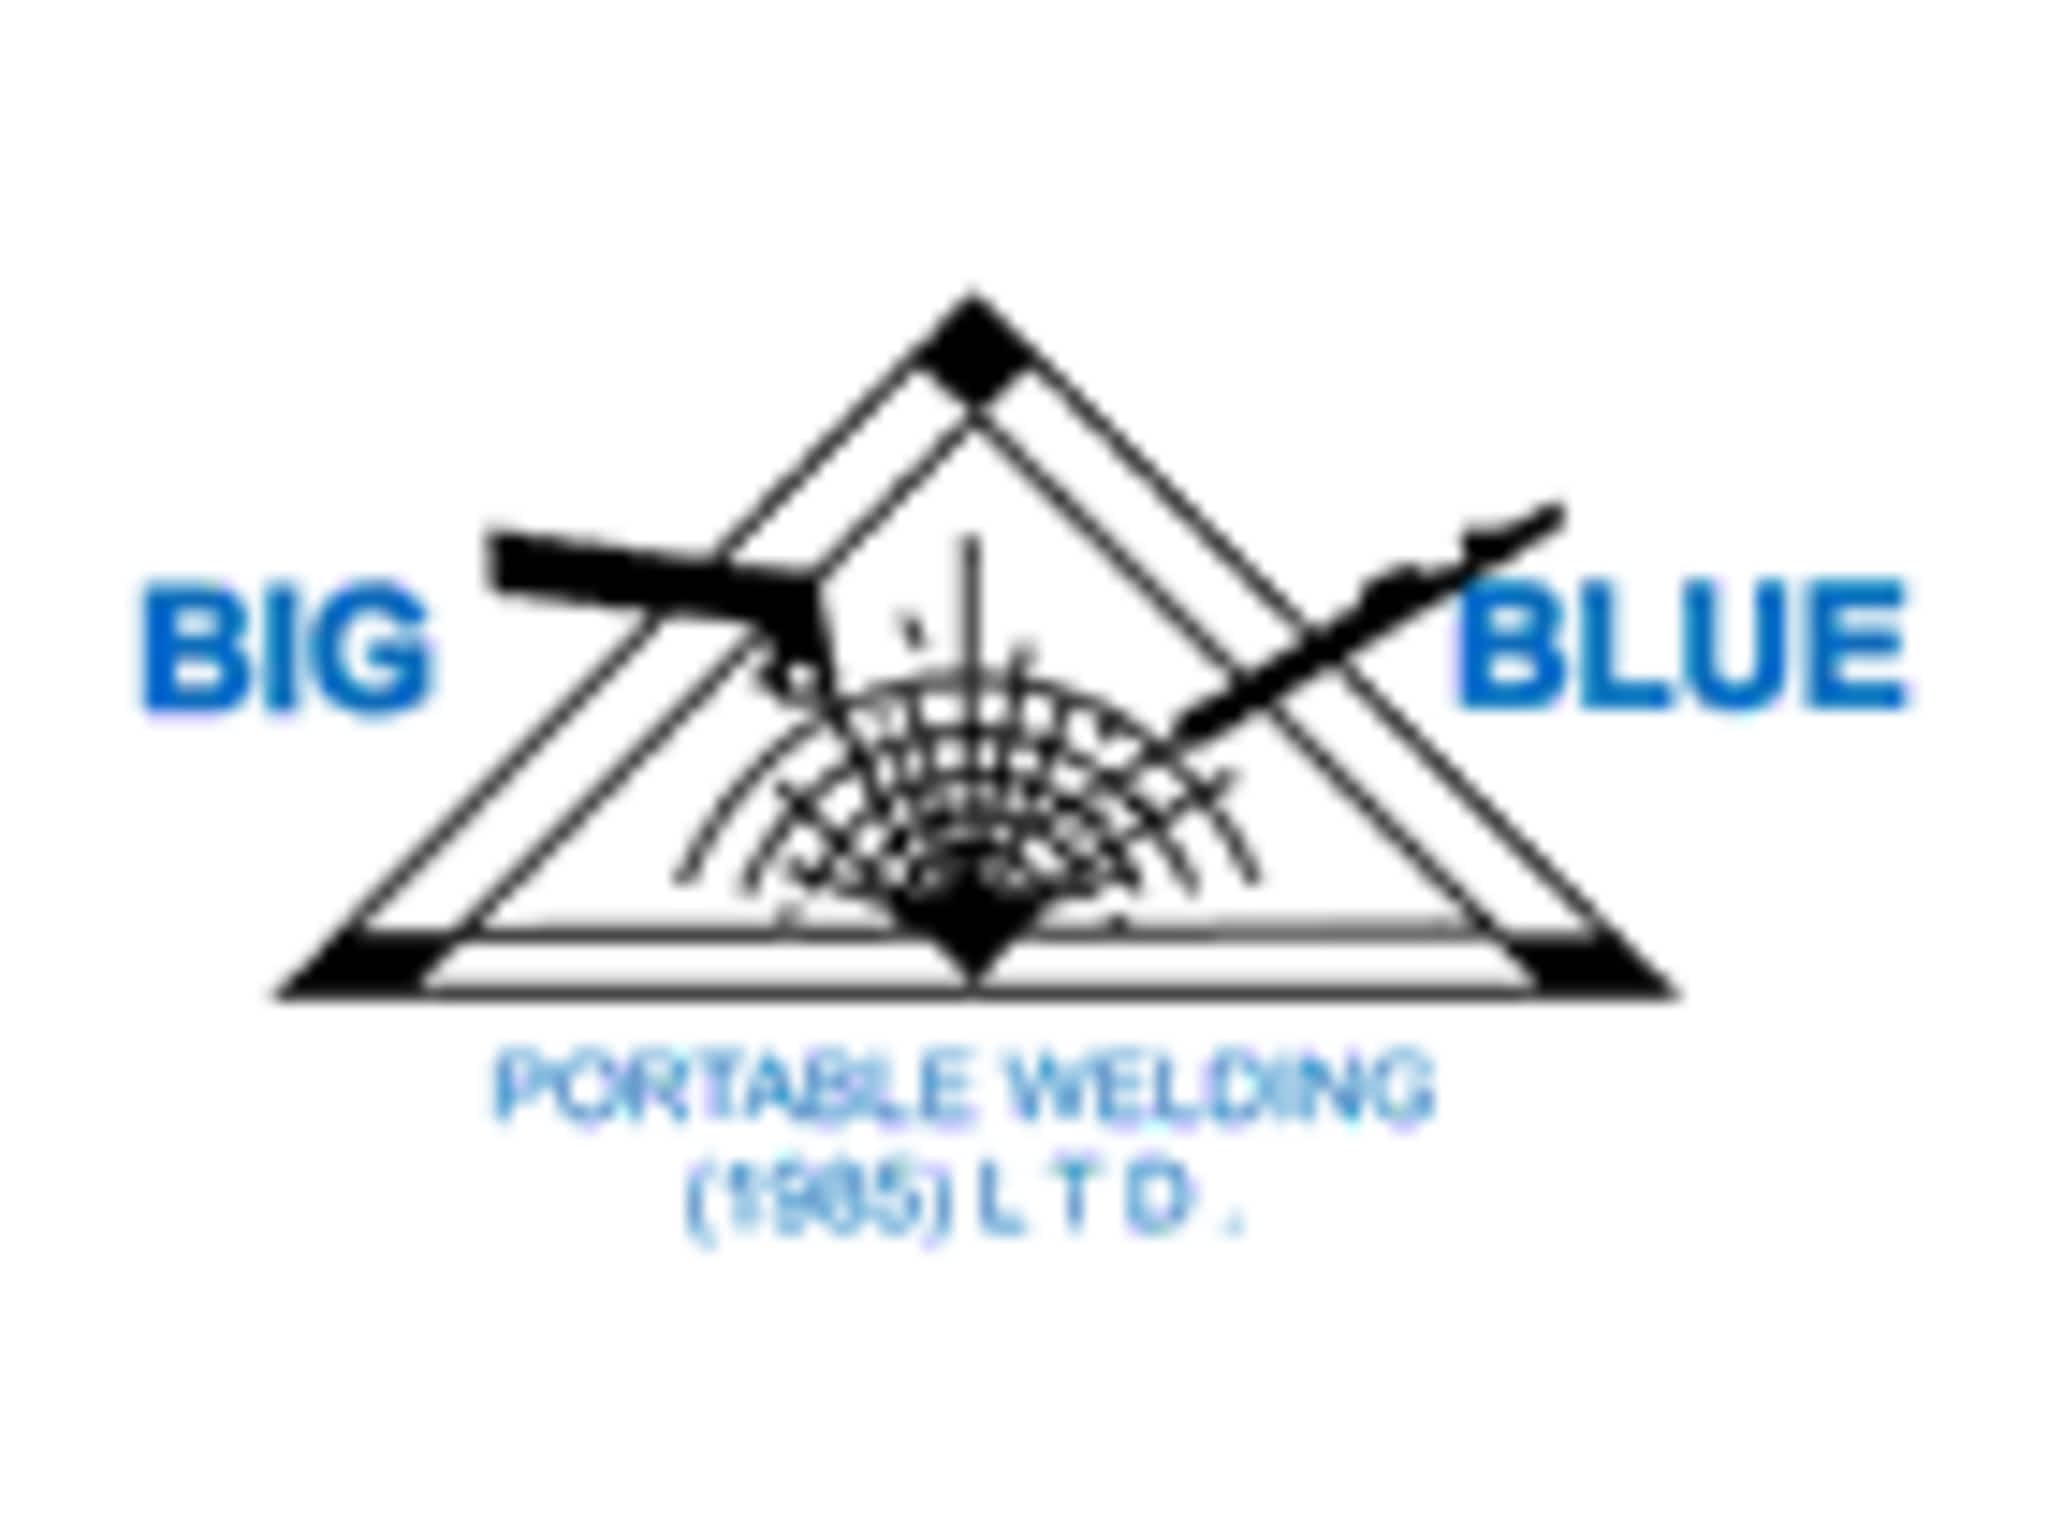 photo Big Blue Portable Welding (1985) Ltd